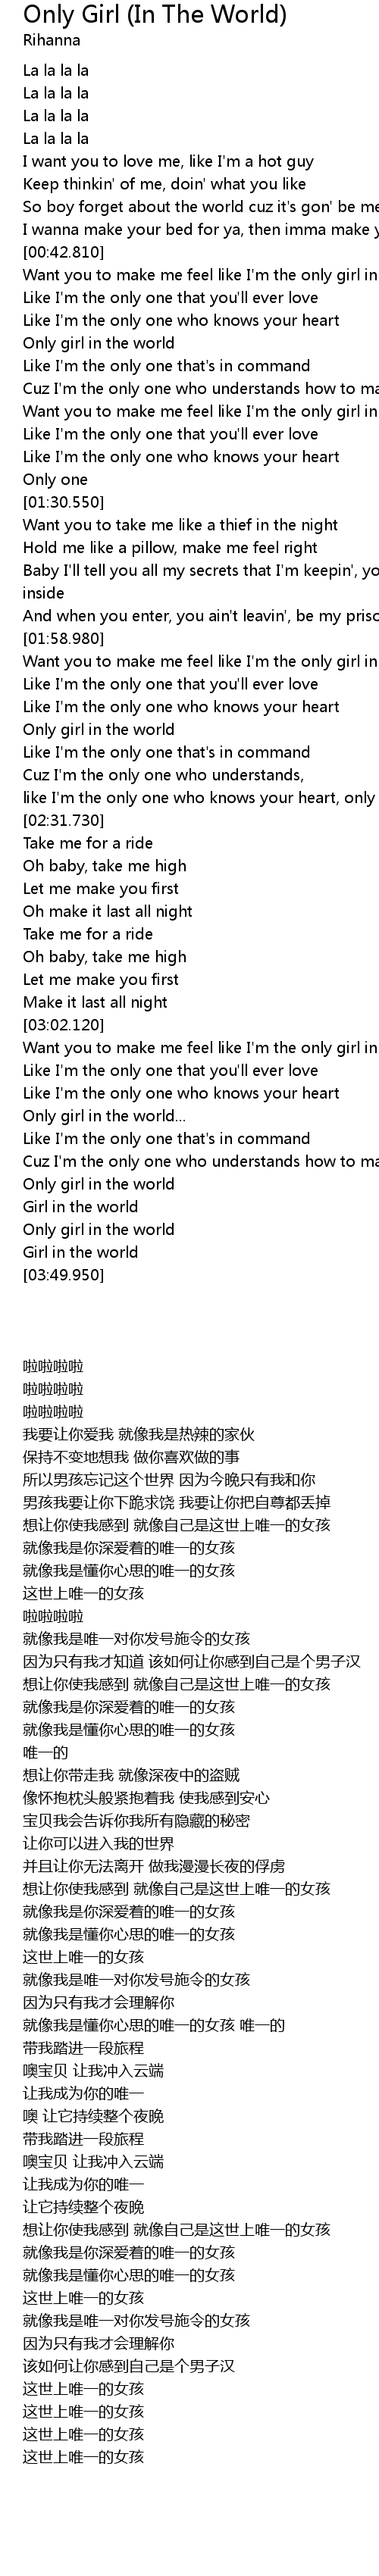 Only Girl In The World Lyrics Follow Lyrics